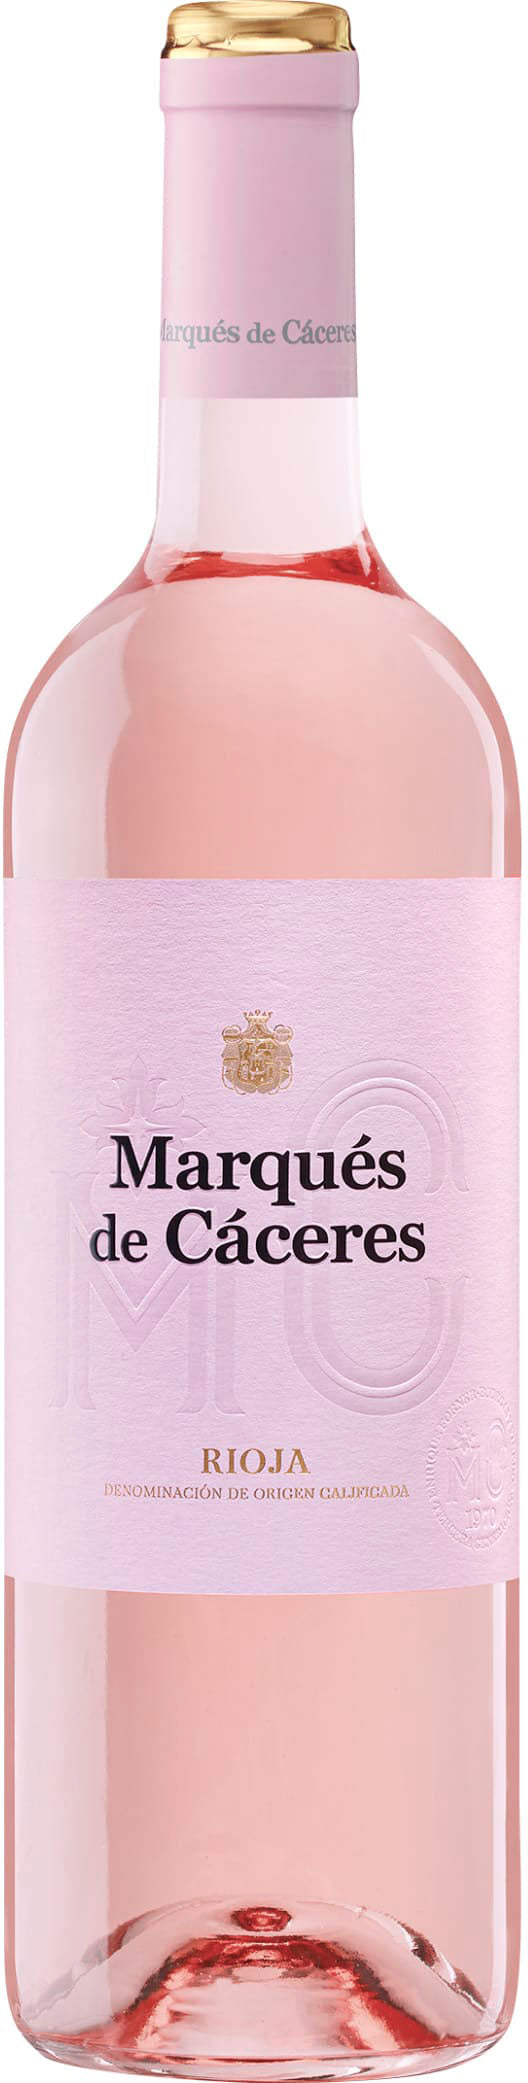 Marques de Caceres Rioja Rose 2019